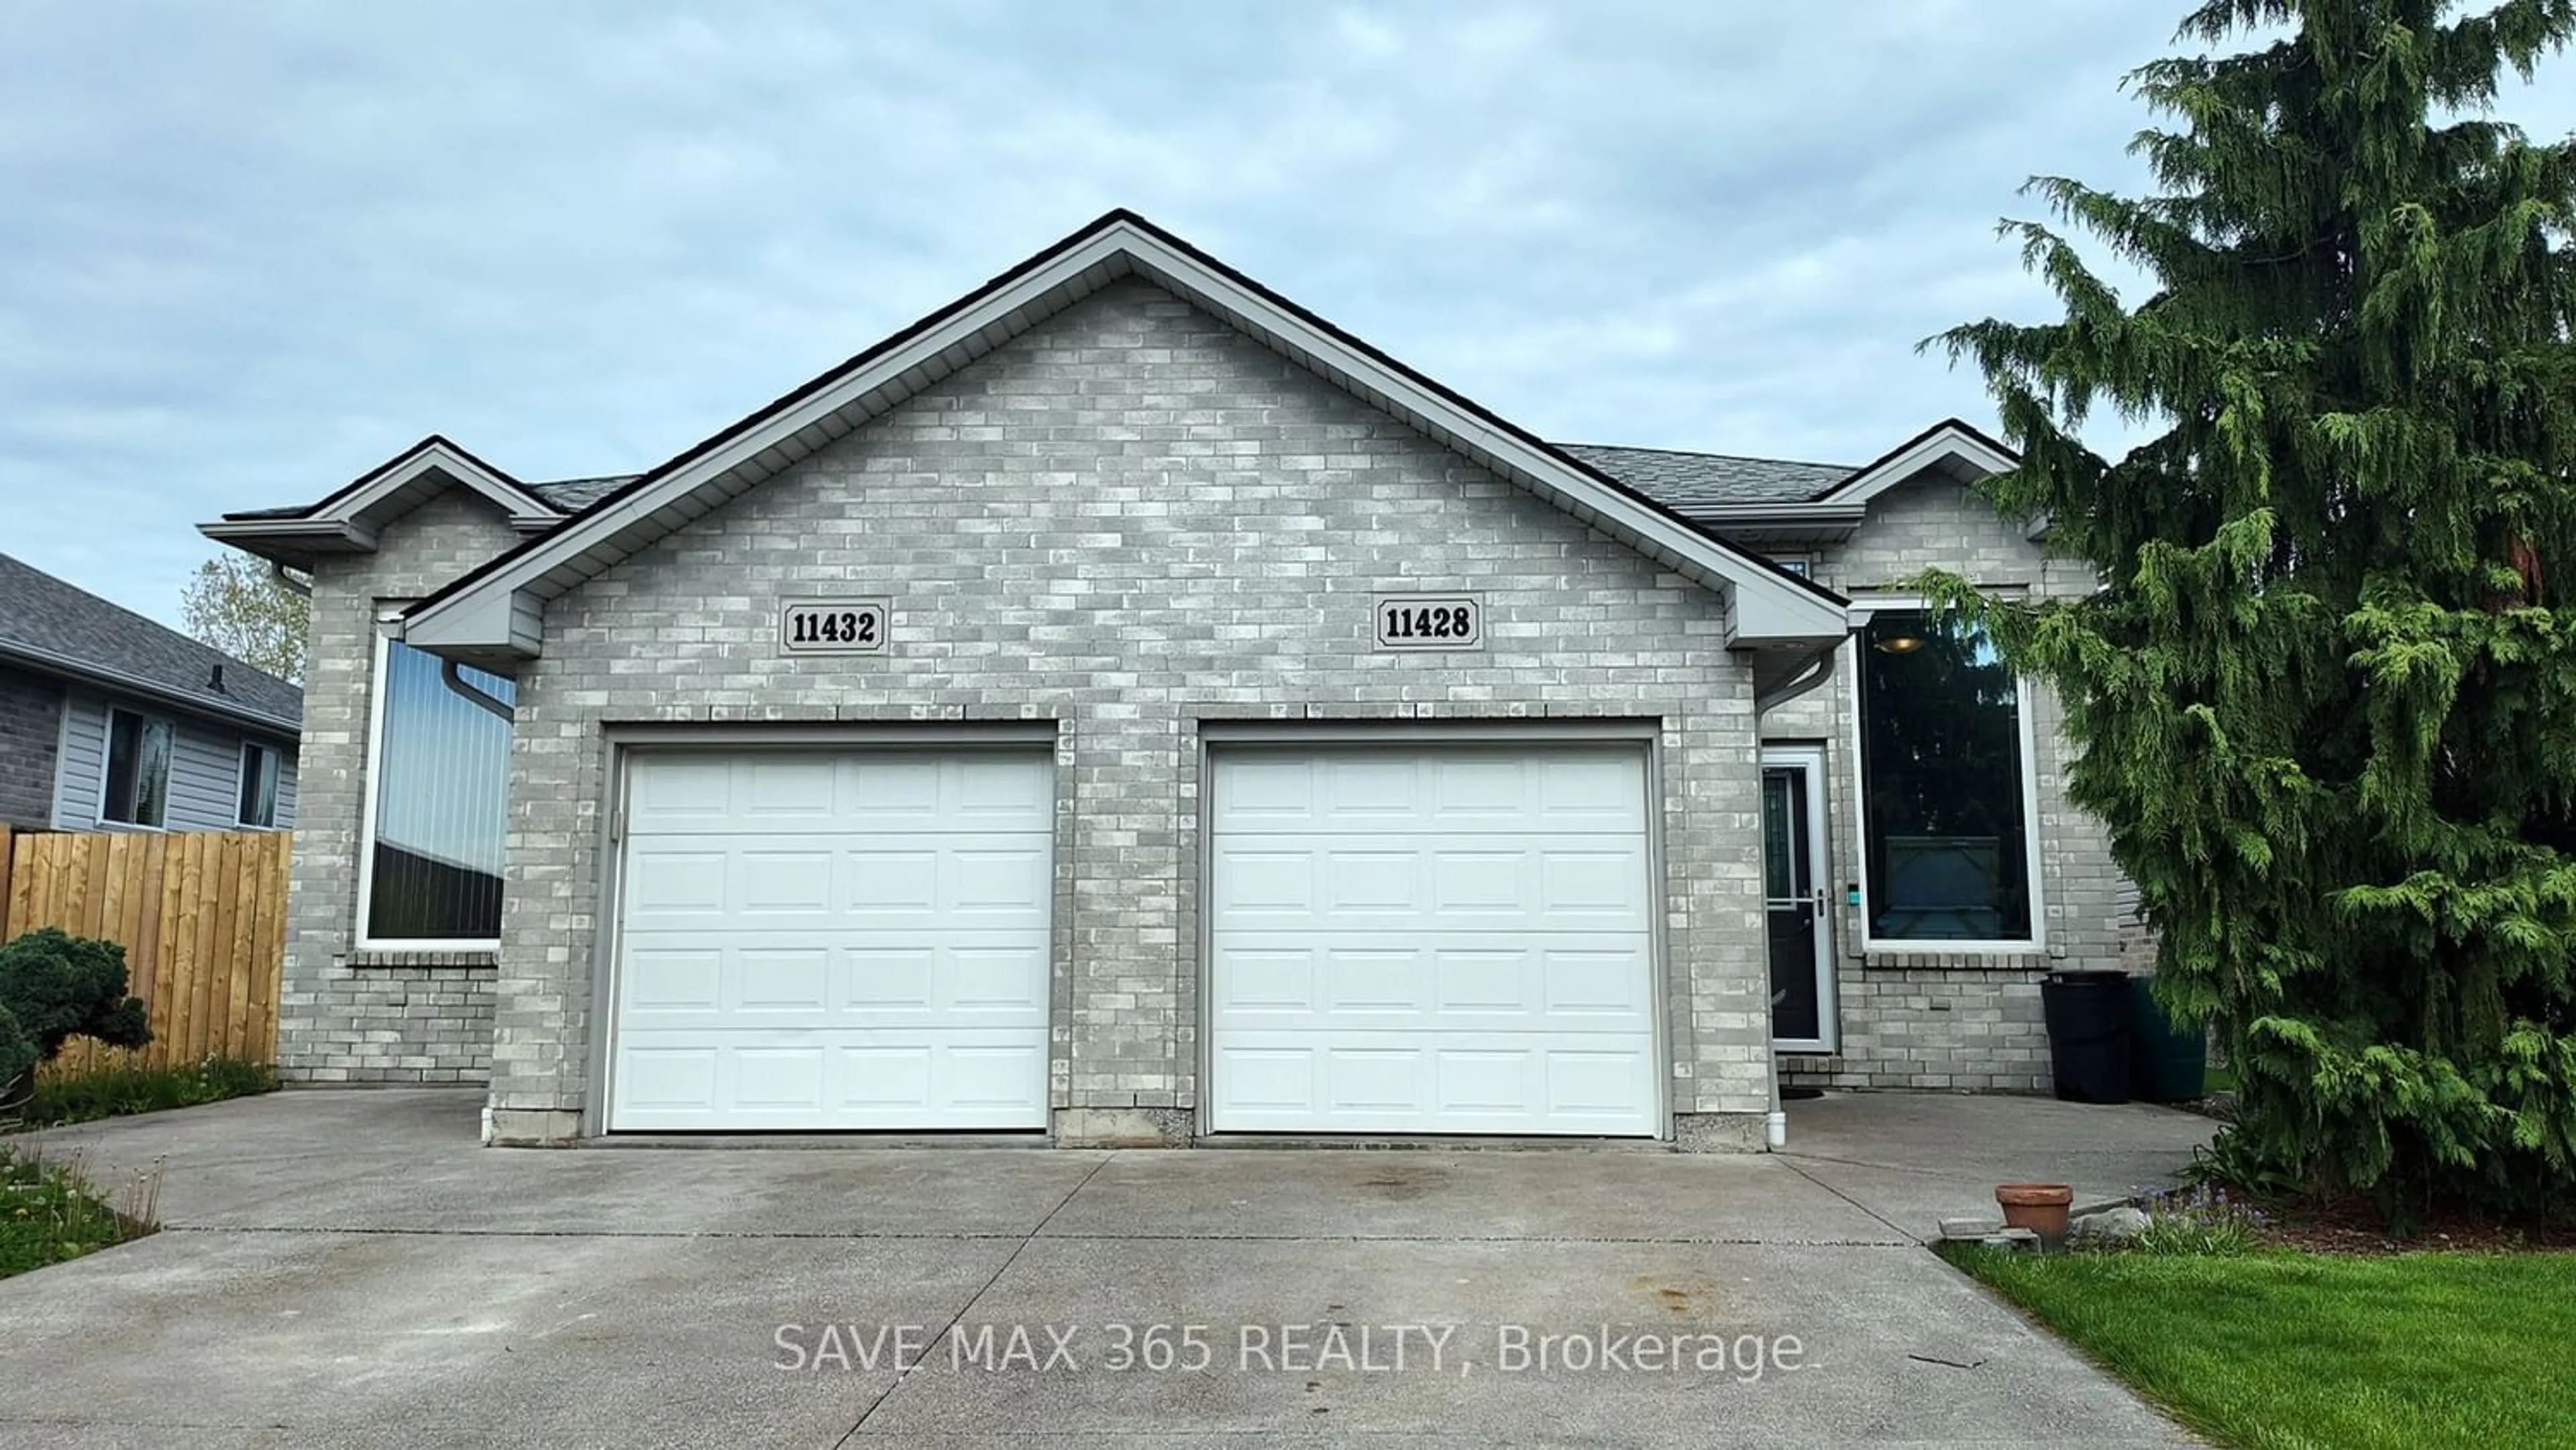 Frontside or backside of a home for 11428 Timber Bay Cres, Windsor Ontario N8R 2K9